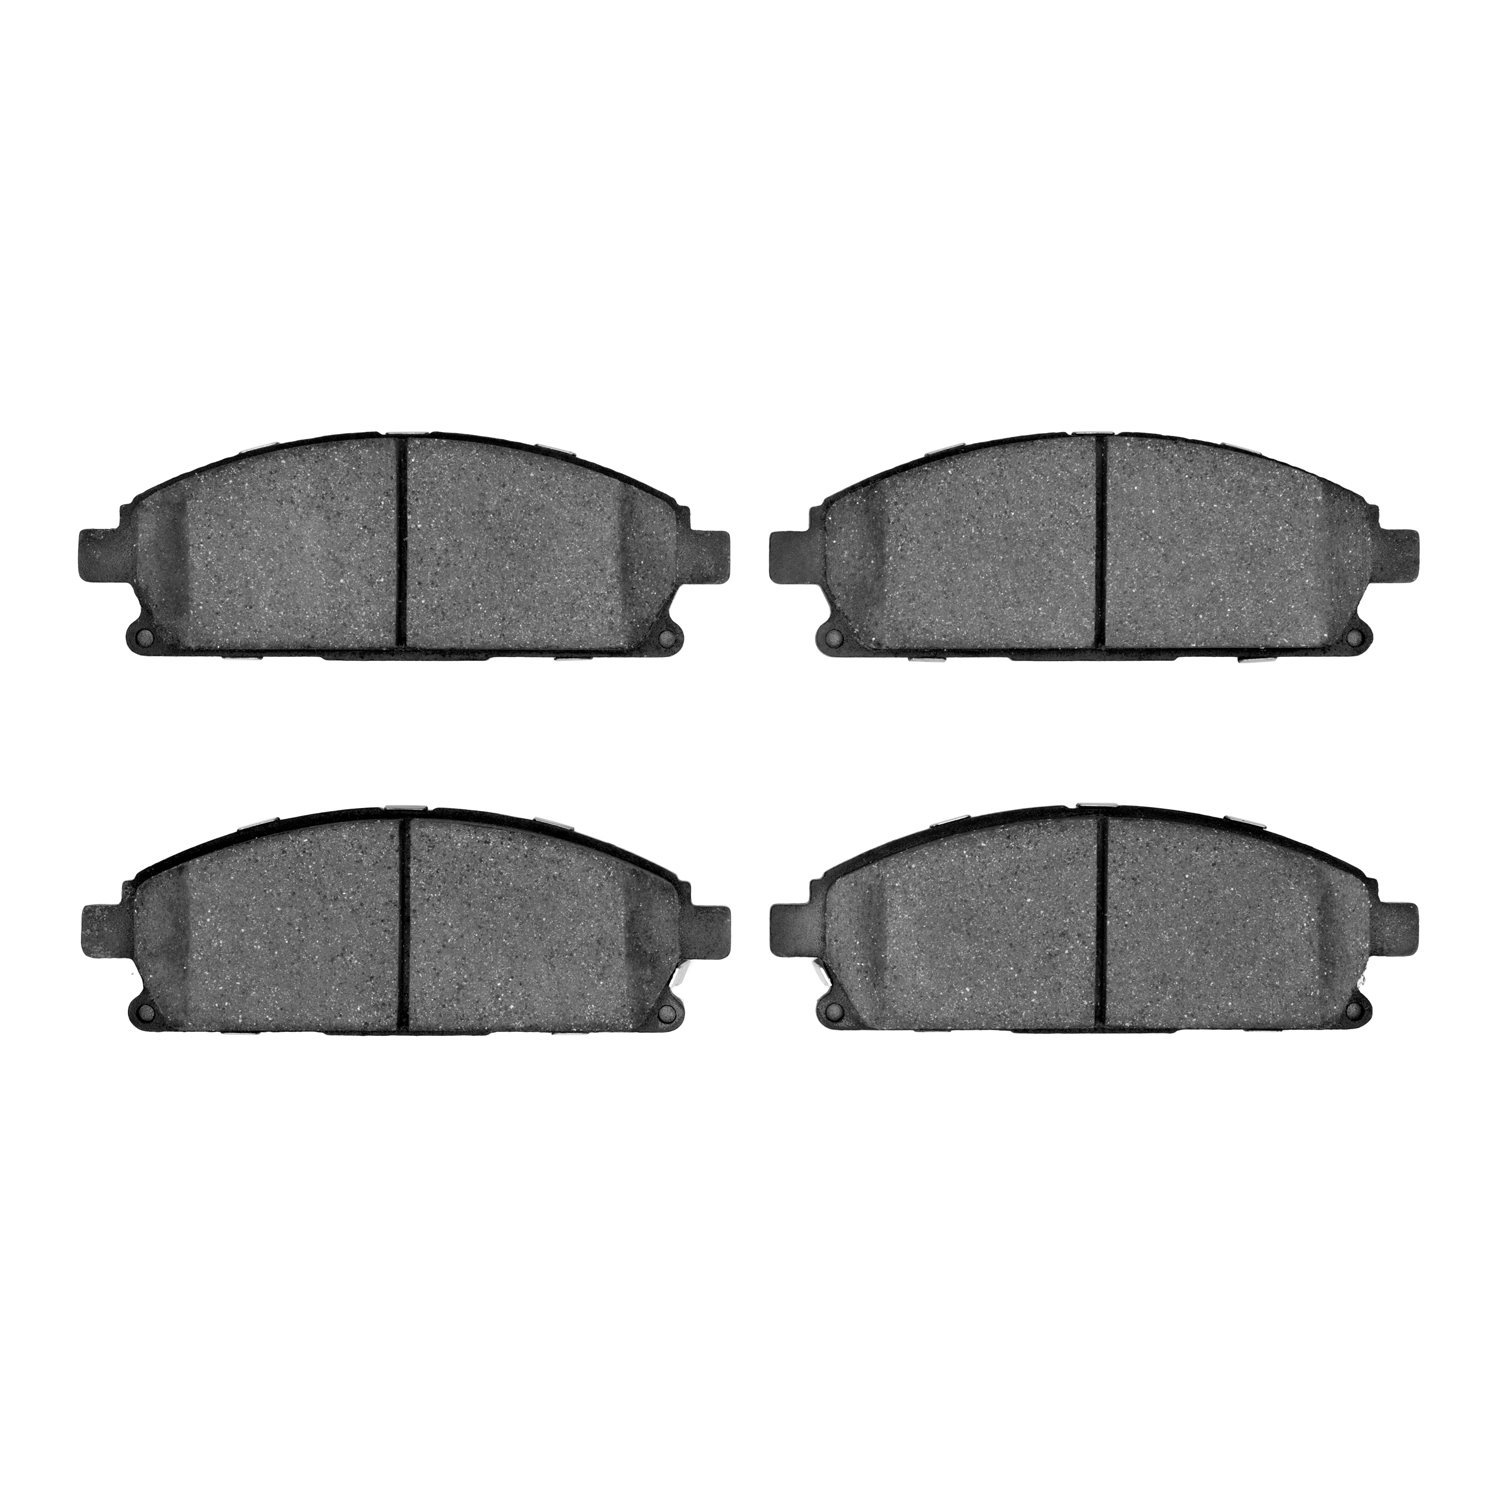 5000 Advanced Ceramic Brake Pads, 1996-2017 Multiple Makes/Models